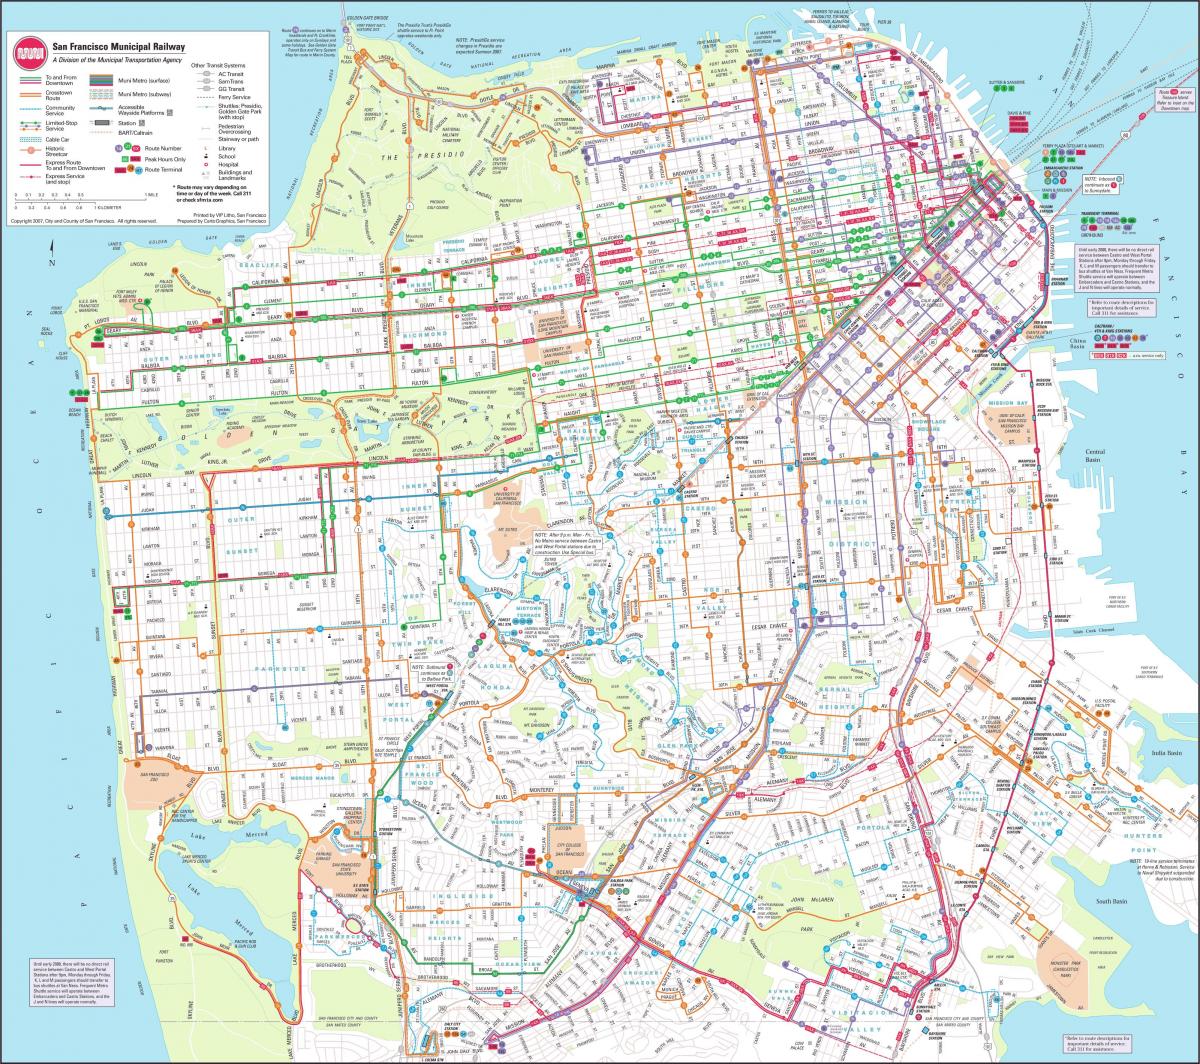 Kart av San Francisco municipal railway